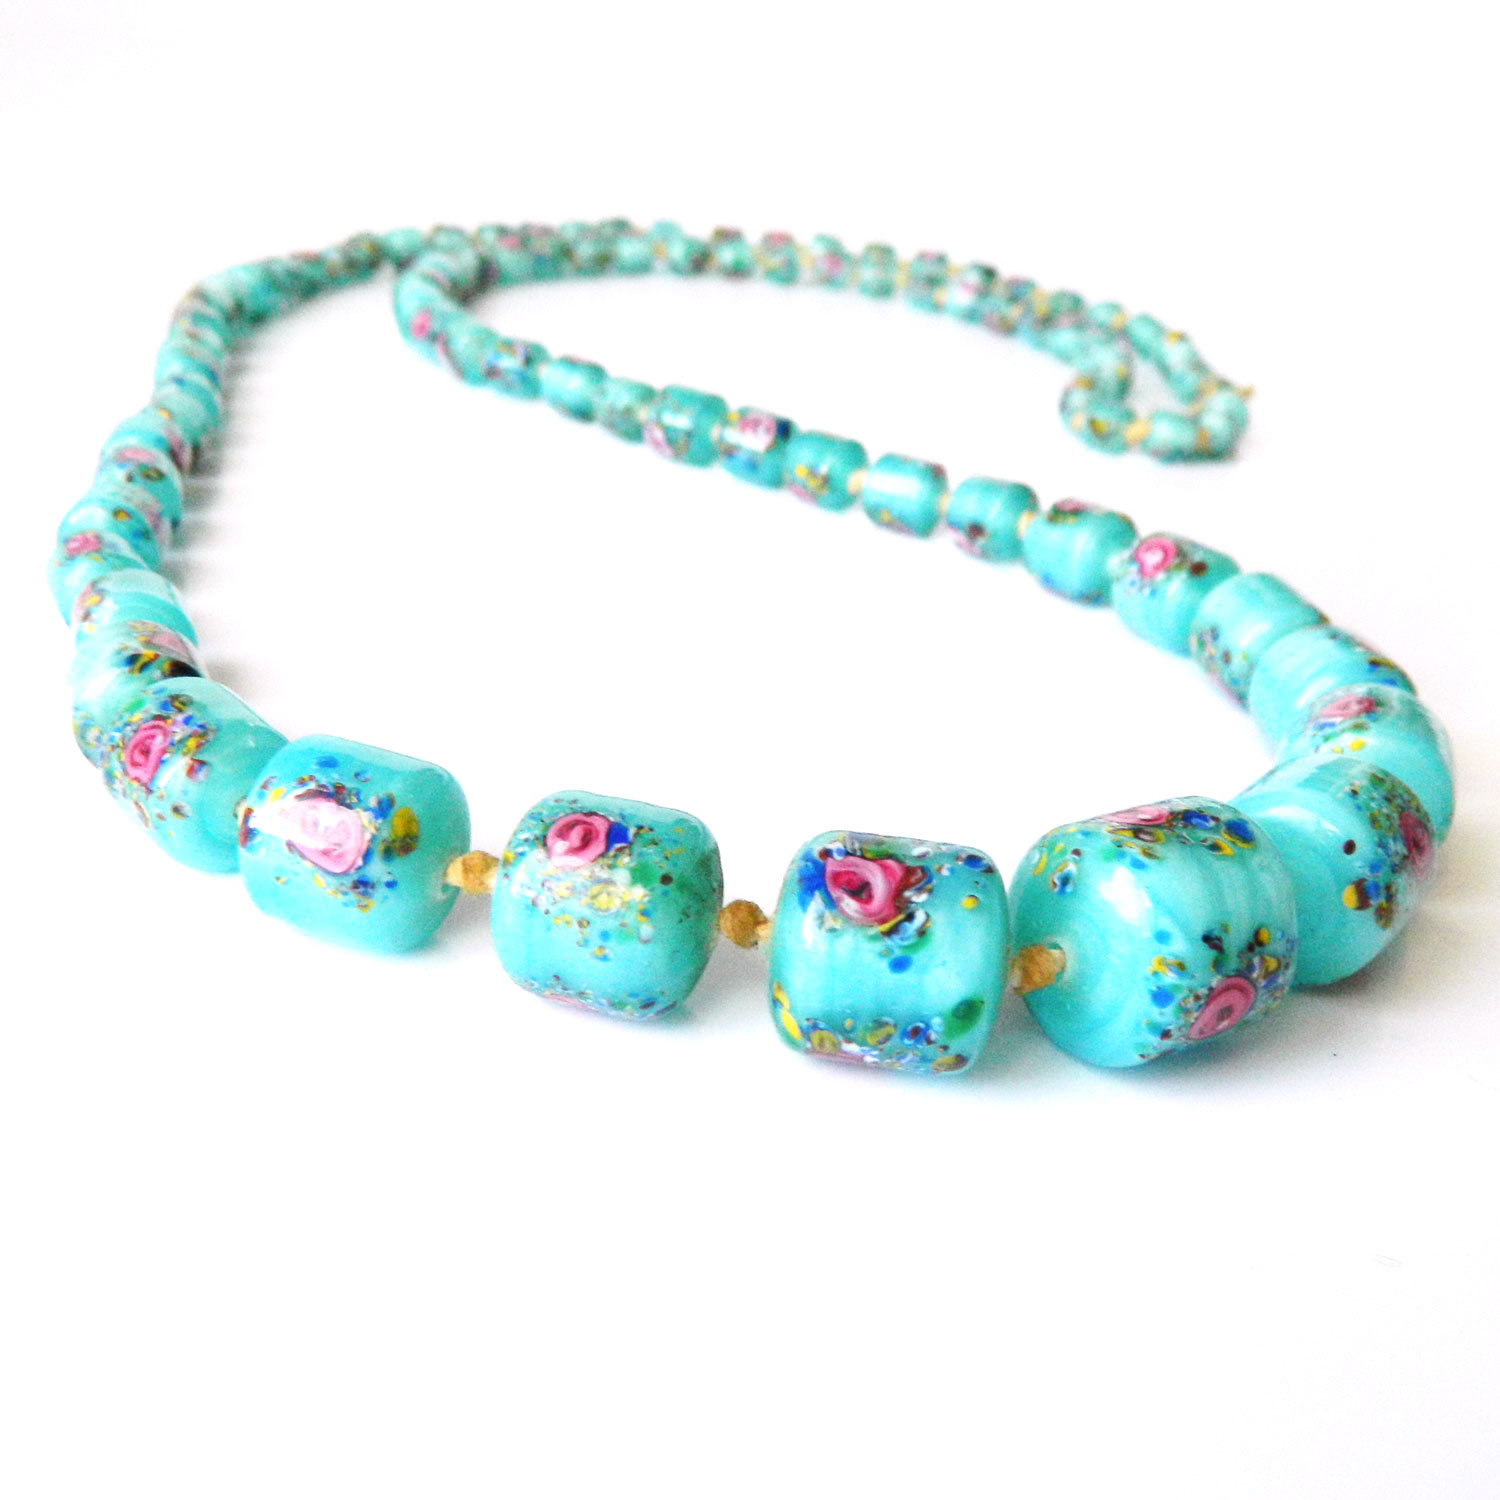 Blue Murano glass bead necklace